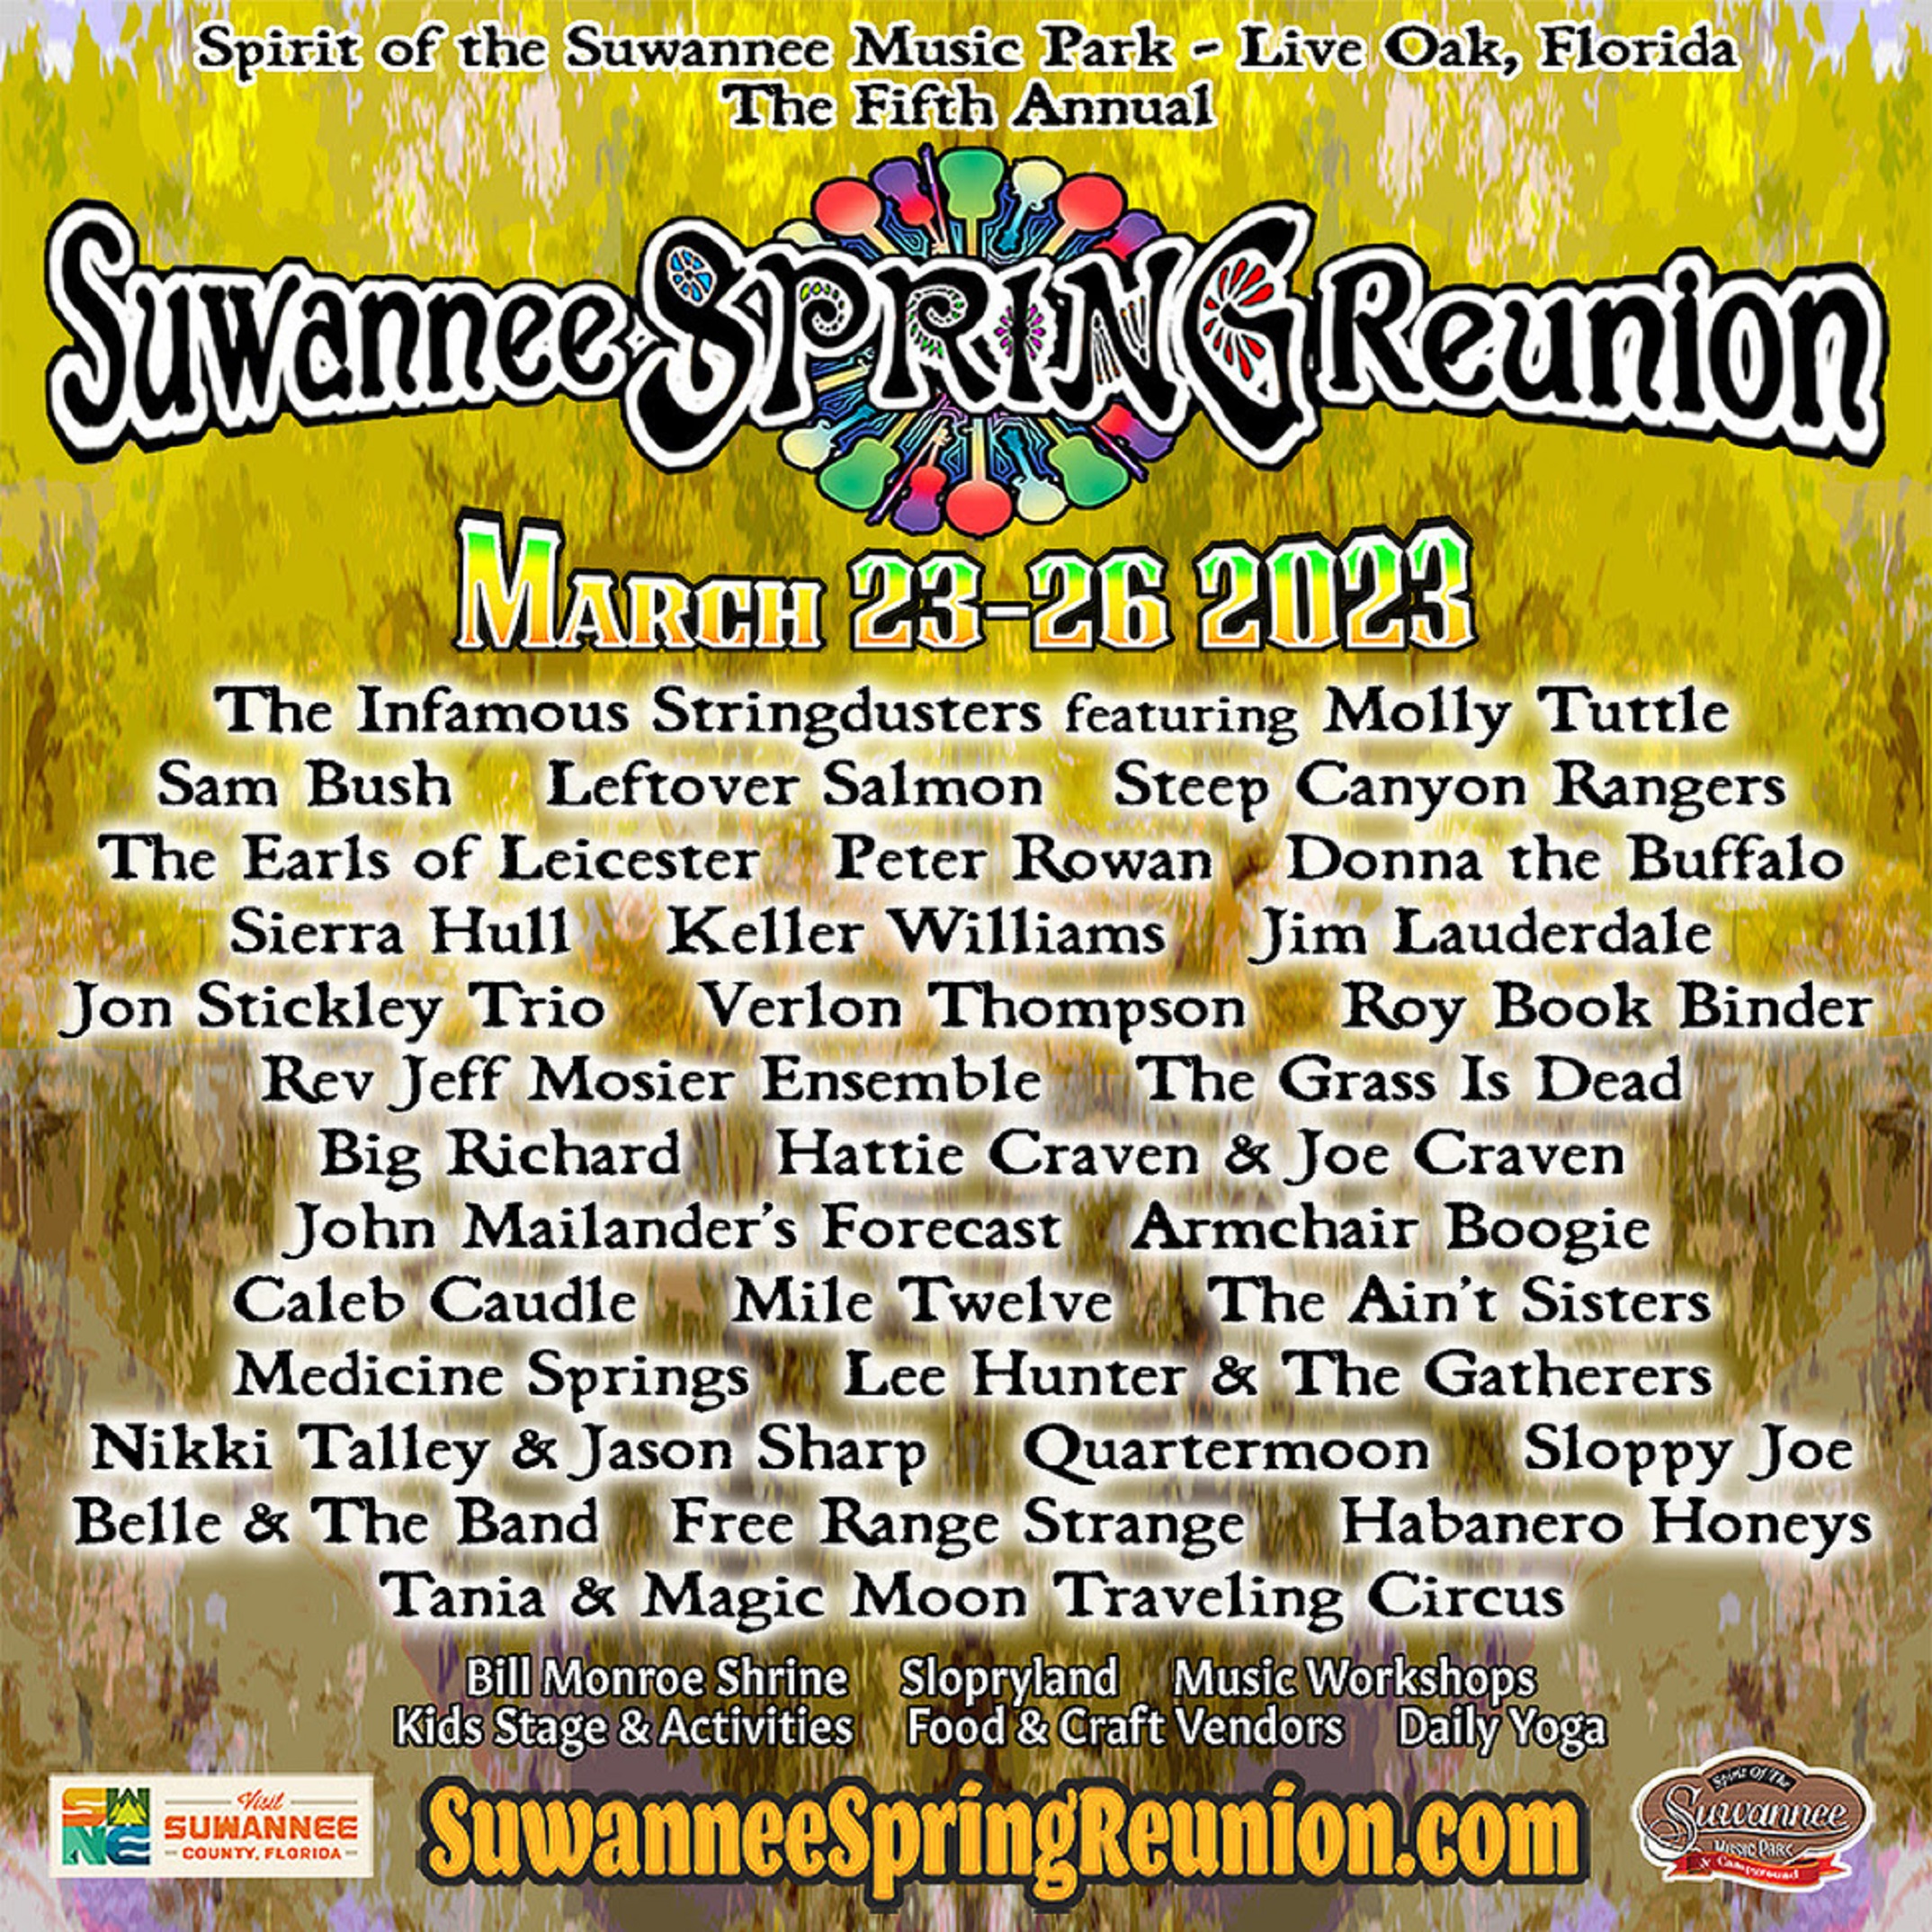 Suwannee Spring Reunion Schedule Announced